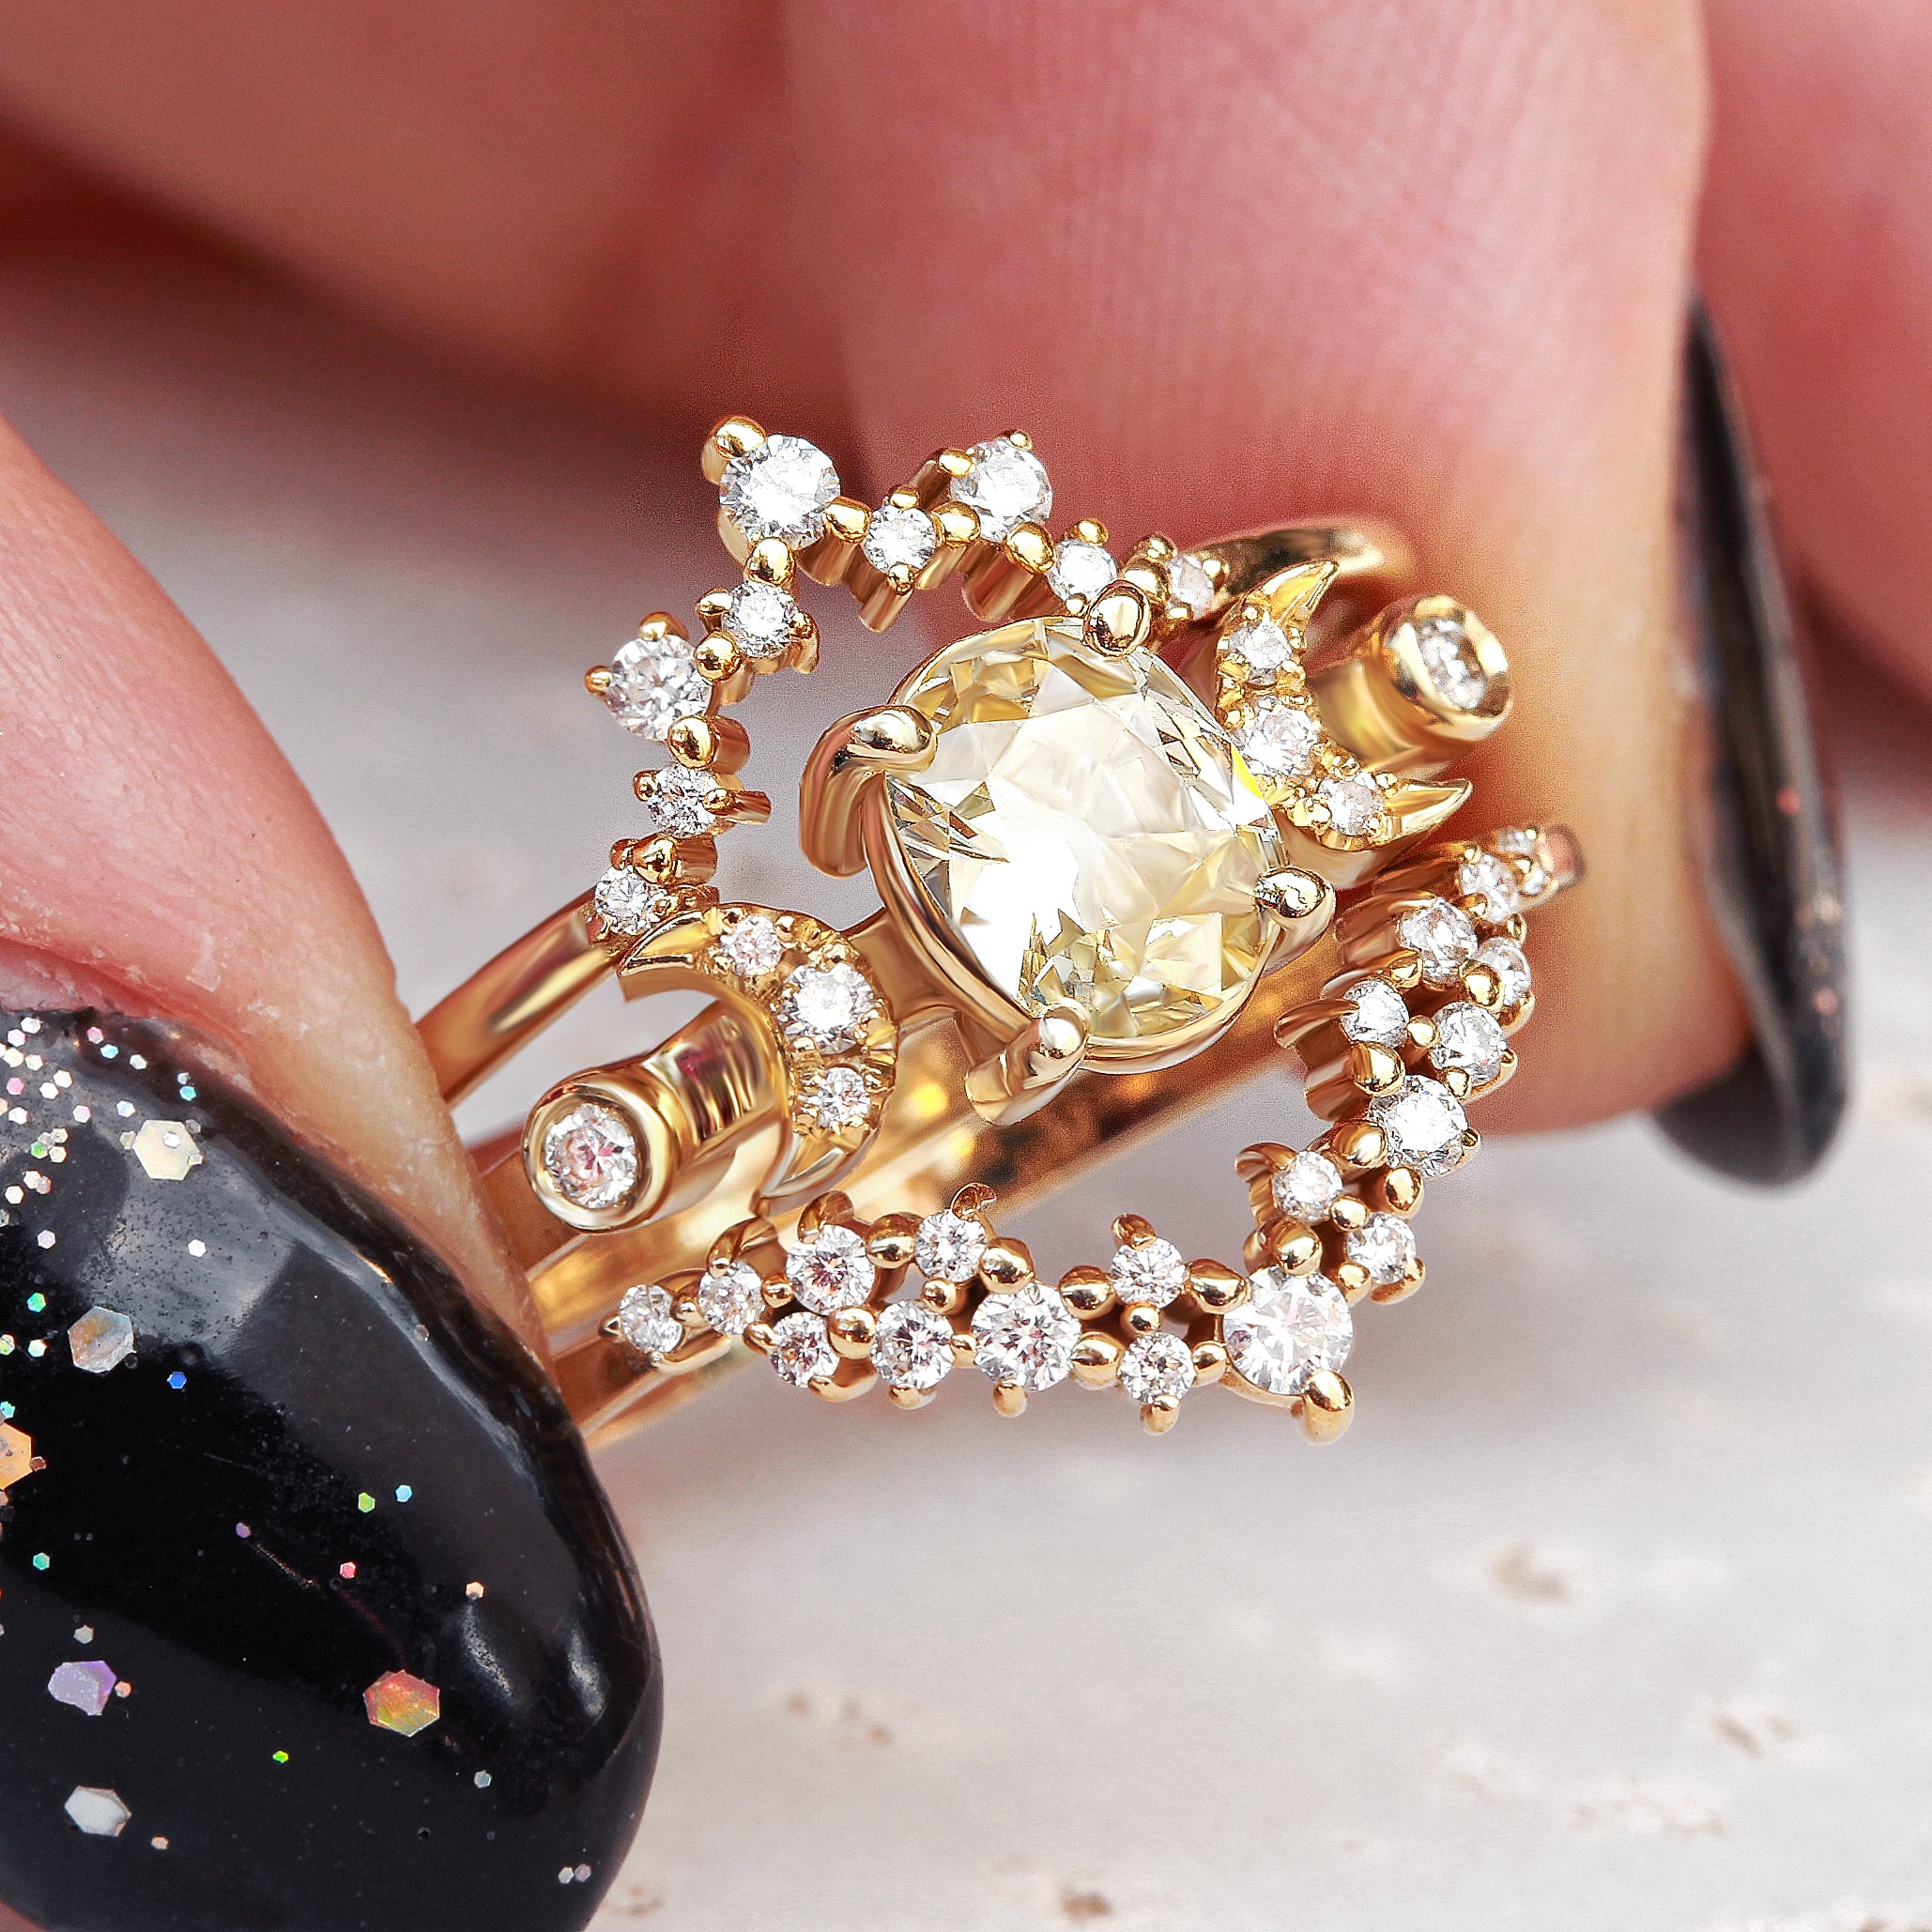 Hindi Moon phase Yellow Oval Diamond 0.66 carat Celestial Unique Engagement Ring - sillyshinydiamonds